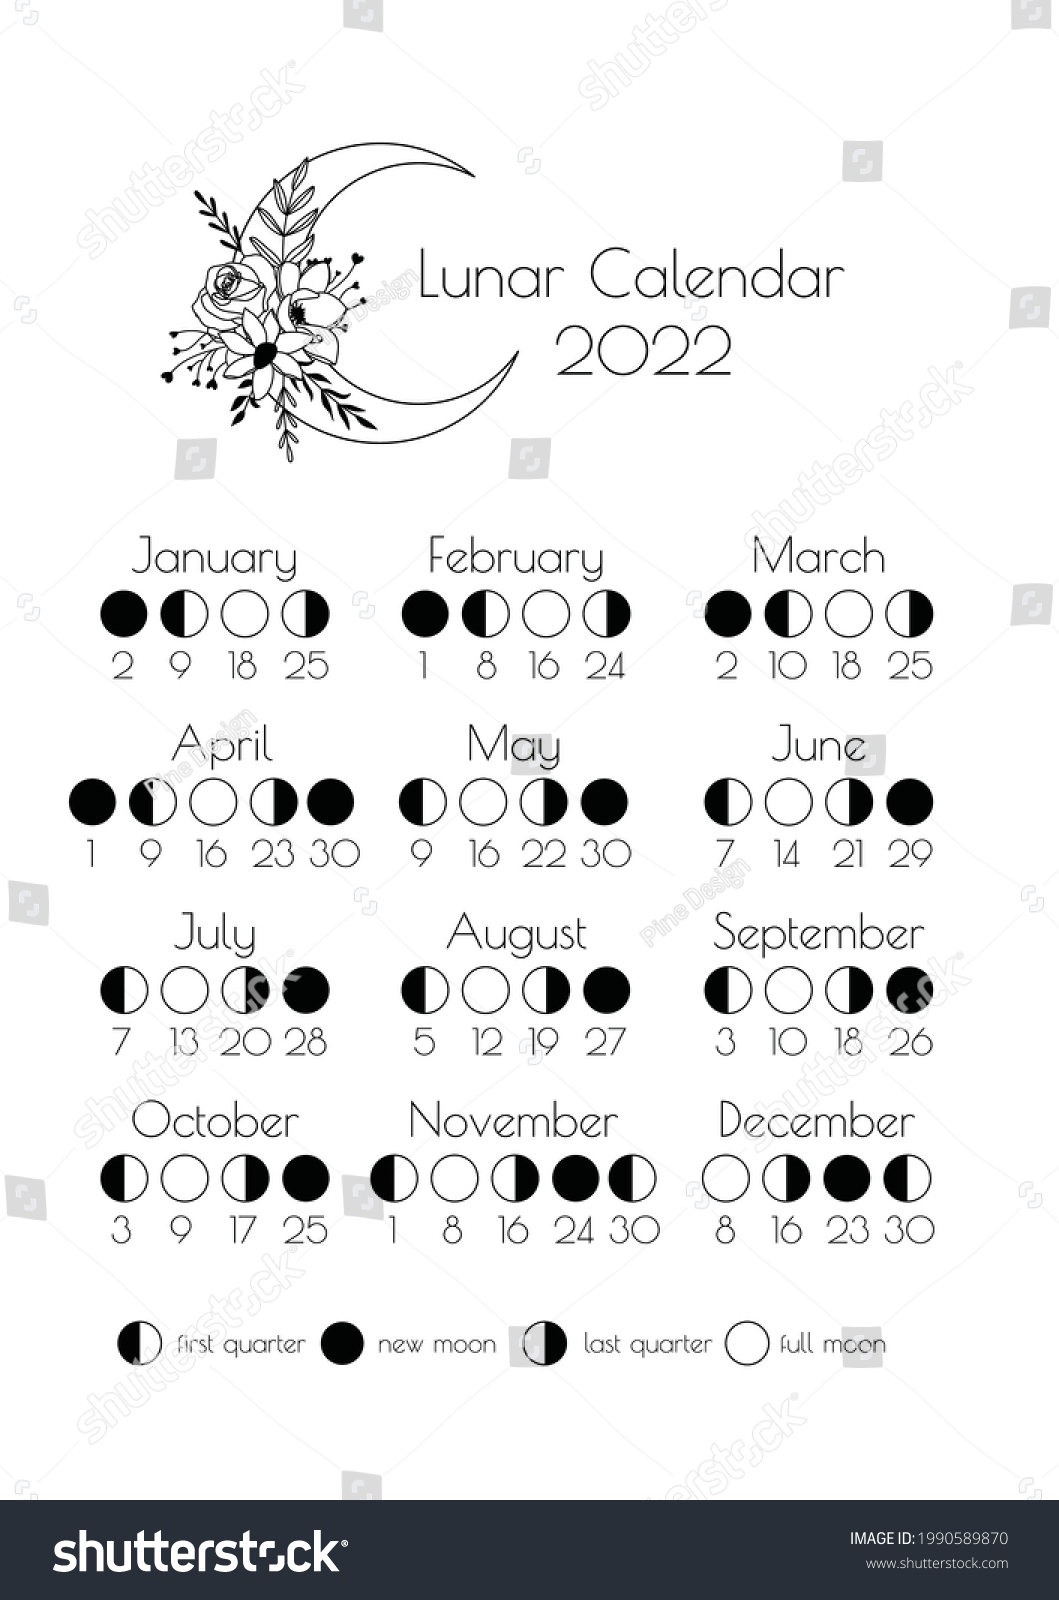 March Moon Calendar 2022 Moon Calendar 2022 Moon Phases 2022 Stock Vector (Royalty Free) 1990589870